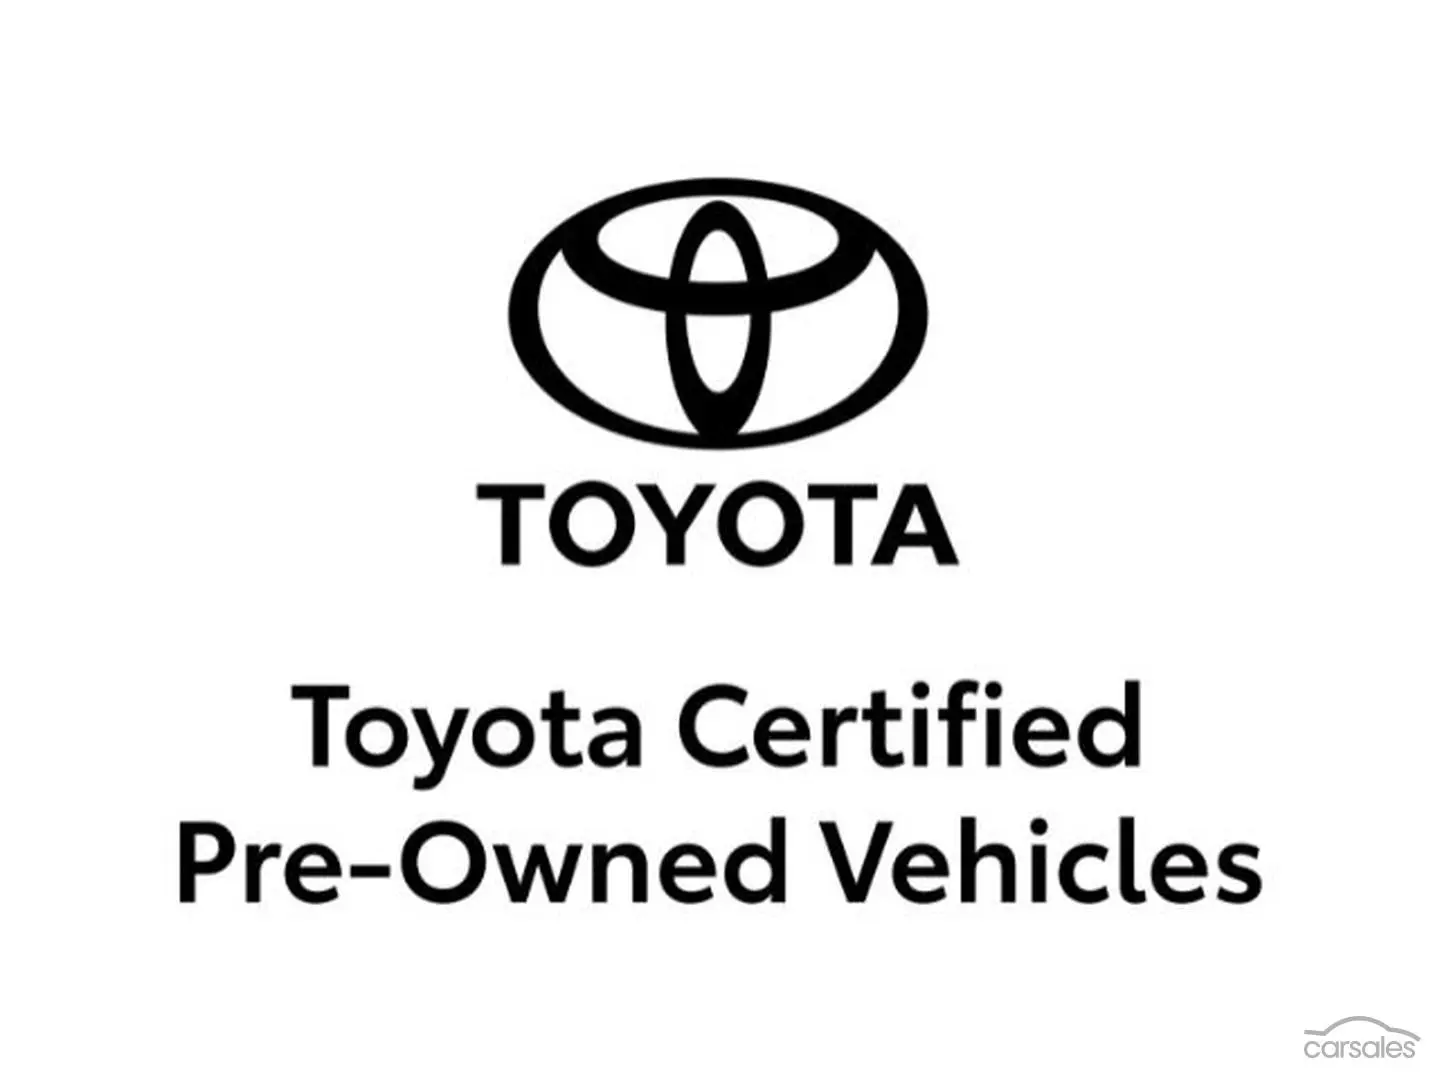 2020 Toyota Camry Image 1